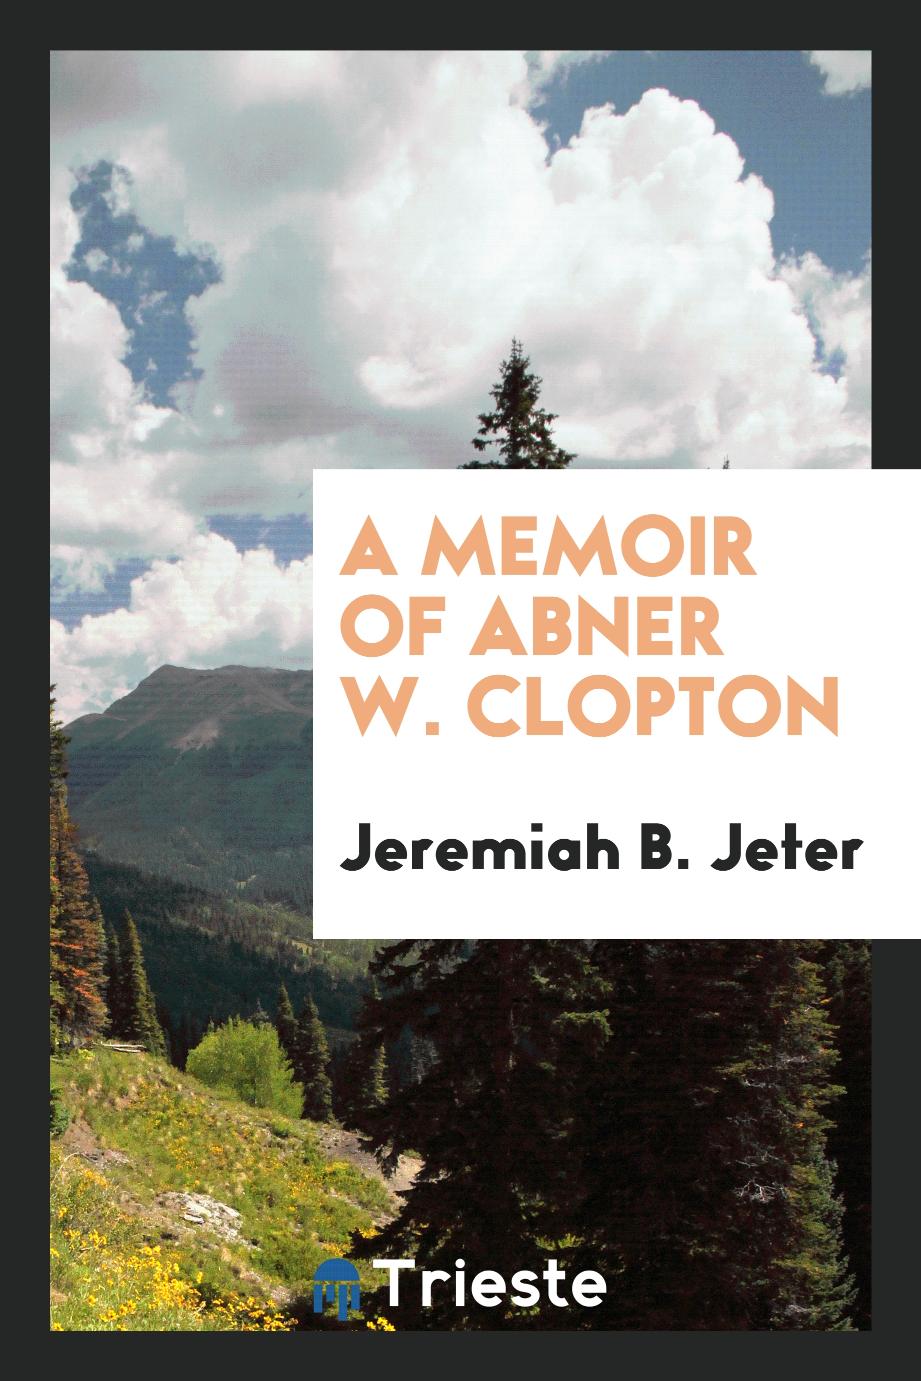 A memoir of Abner W. Clopton